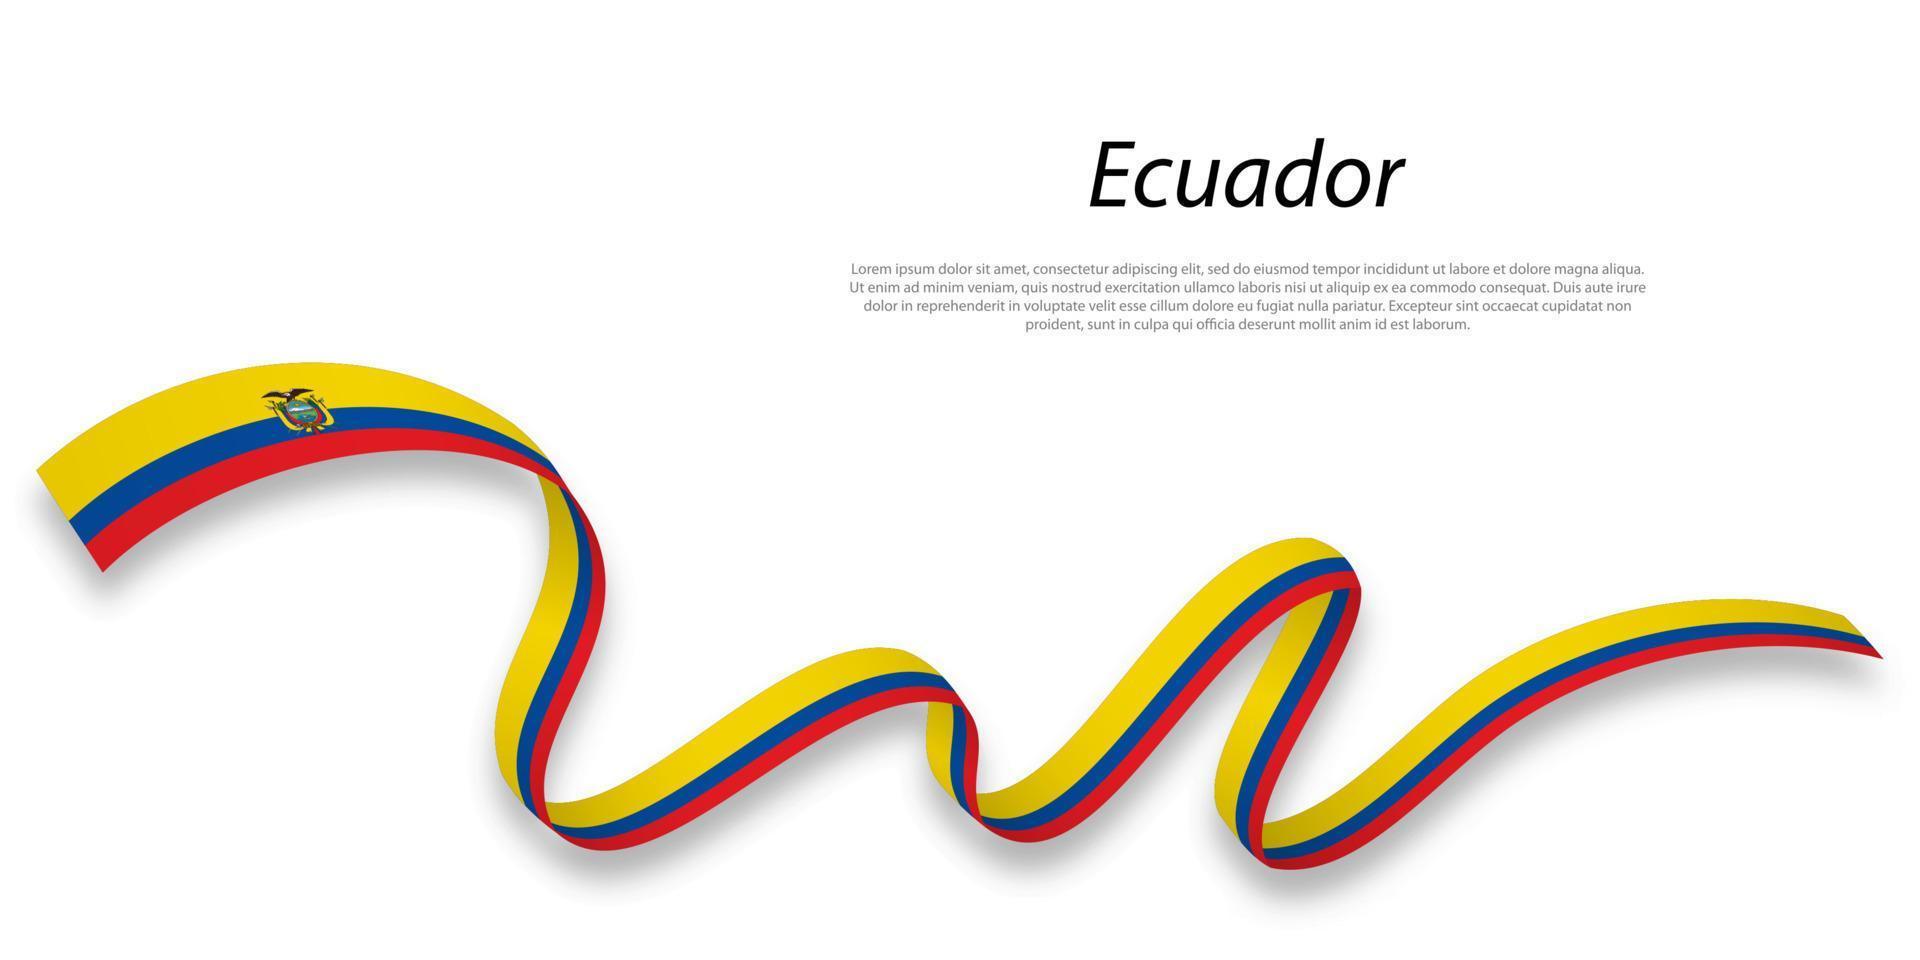 agitando nastro o bandiera con bandiera di ecuador. vettore